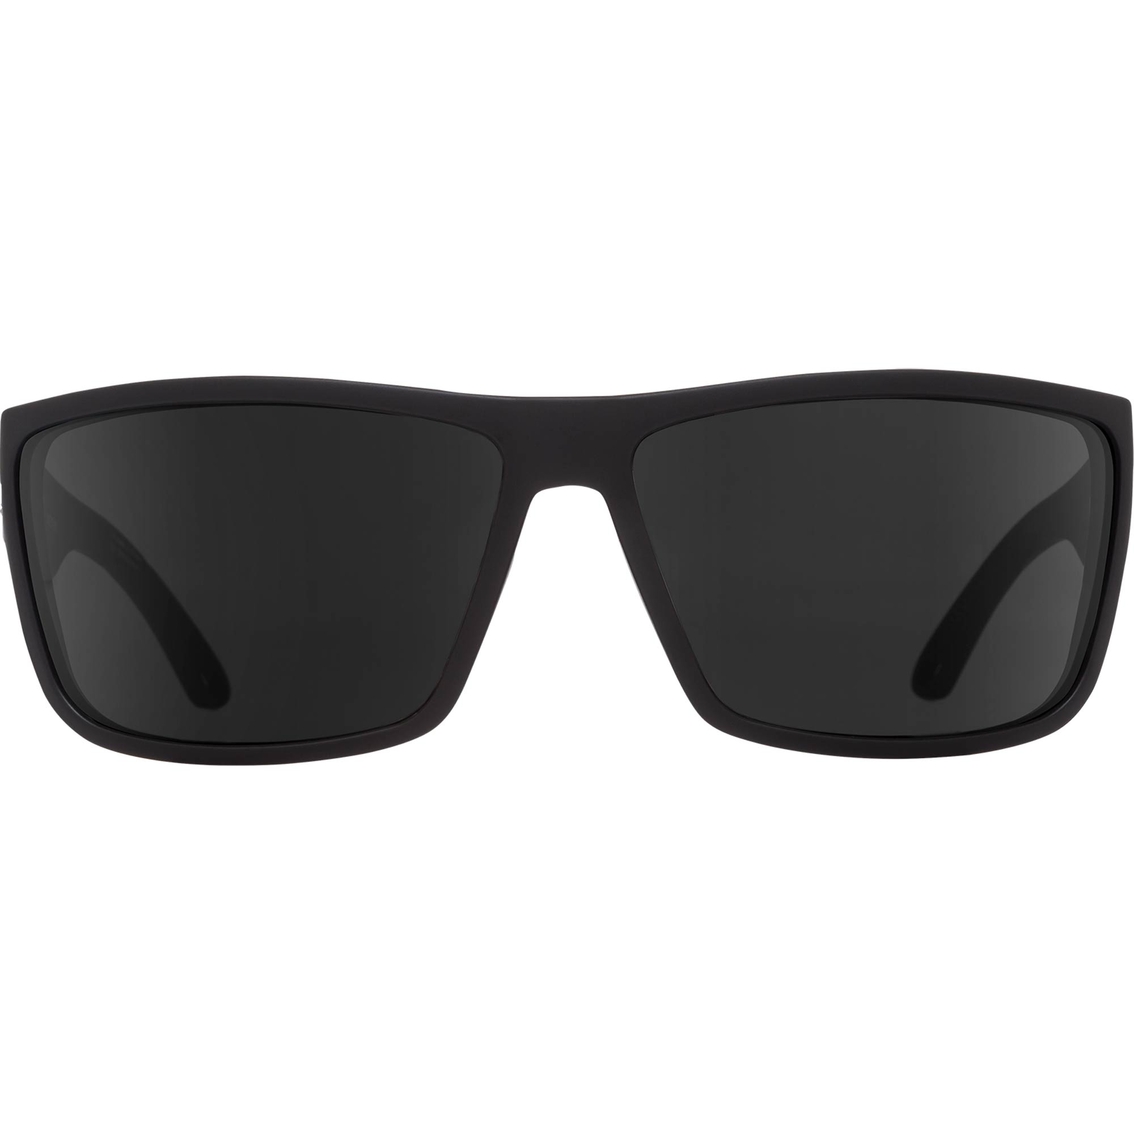 Spy Optic Rocky Standard Issue Sunglasses 6800000000107 | Sunglasses ...